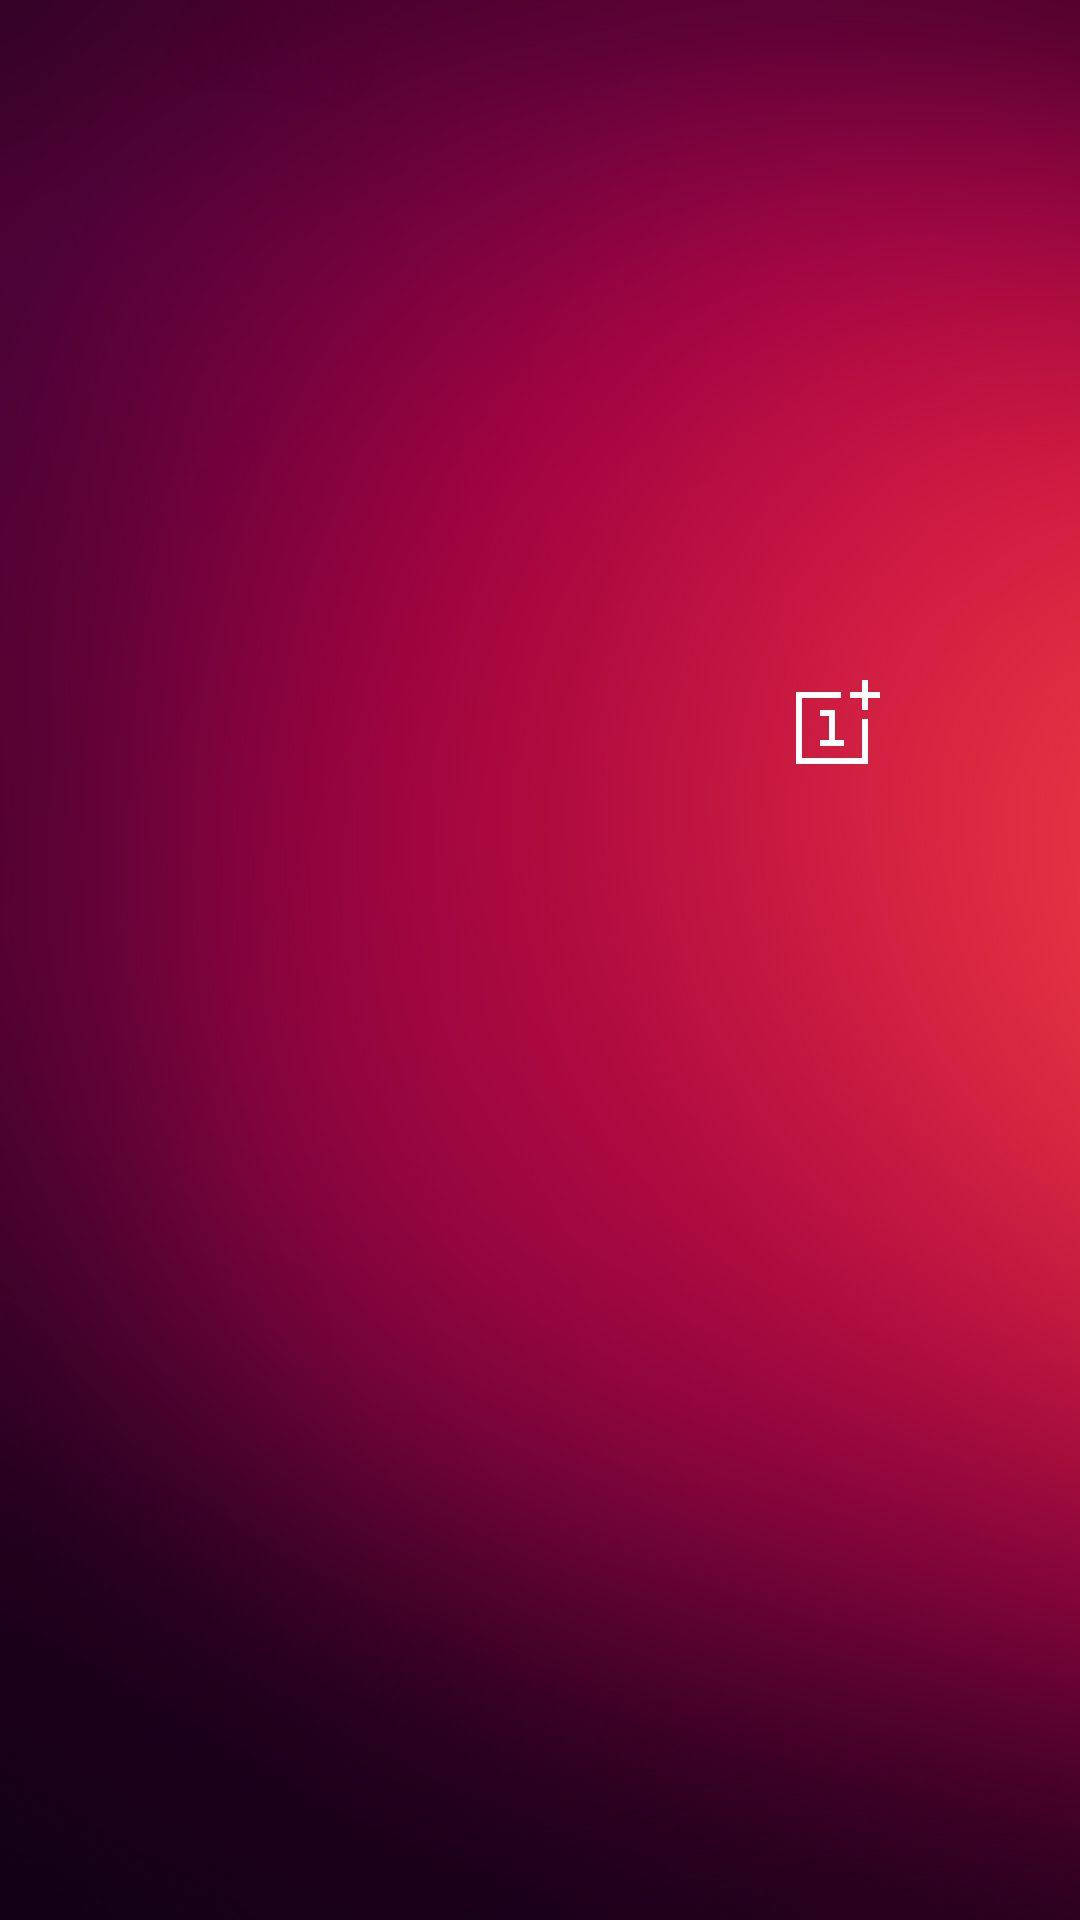 Download Oneplus Logo On Red Wallpaper 